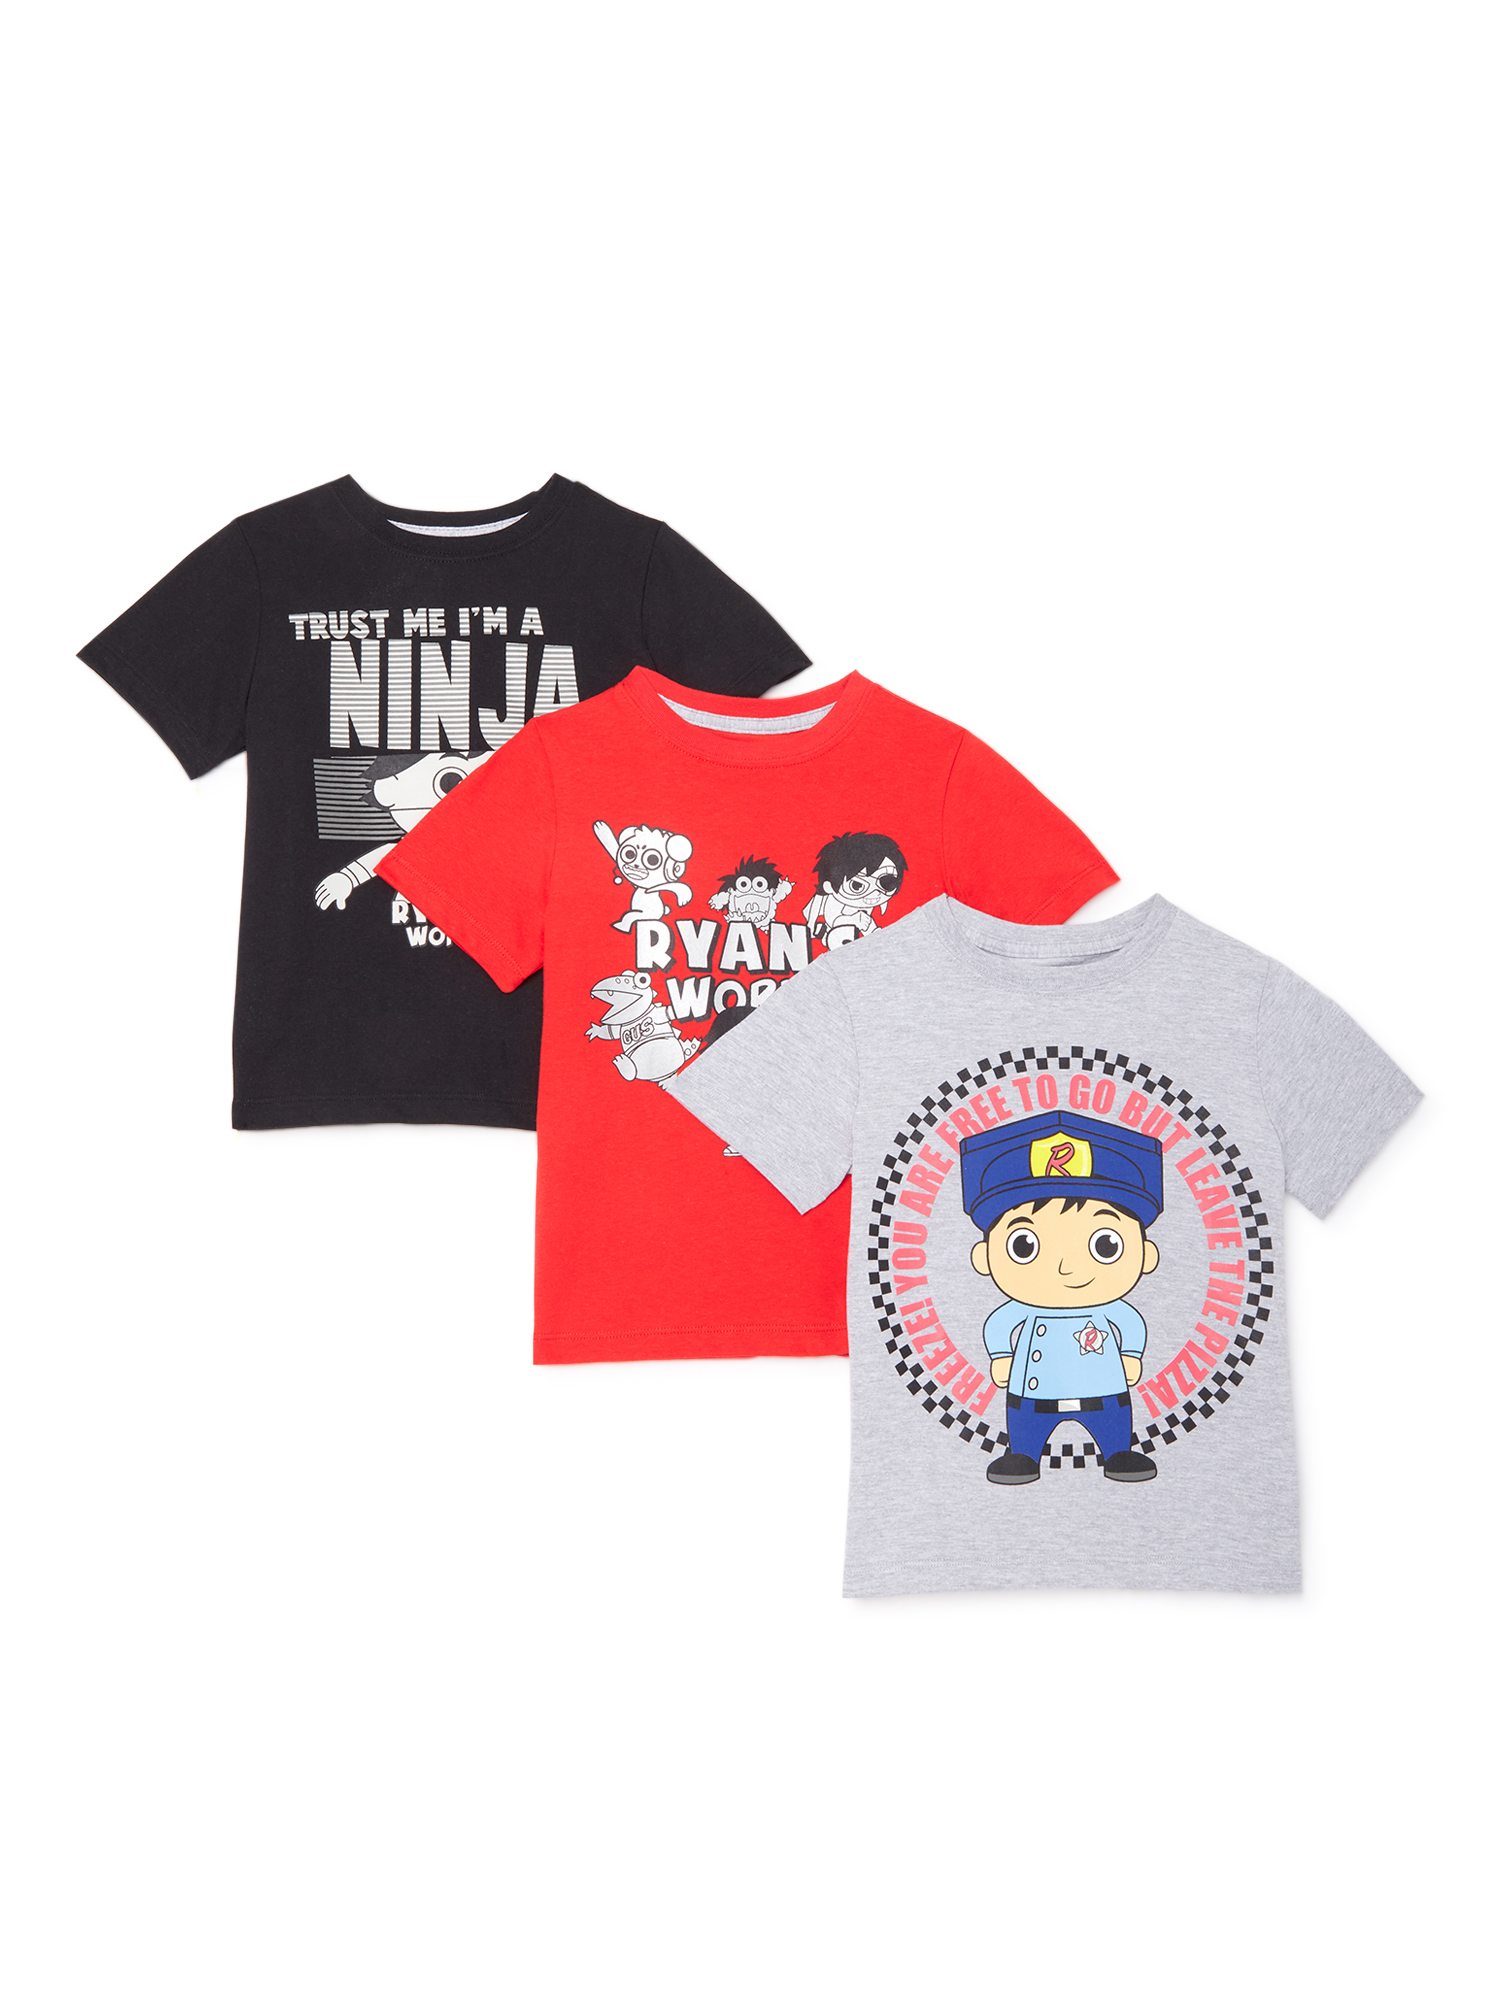 Ryan's World Boys Short Sleeve Graphic T-Shirts, 3 Pack Sizes 4-8 - image 1 of 7